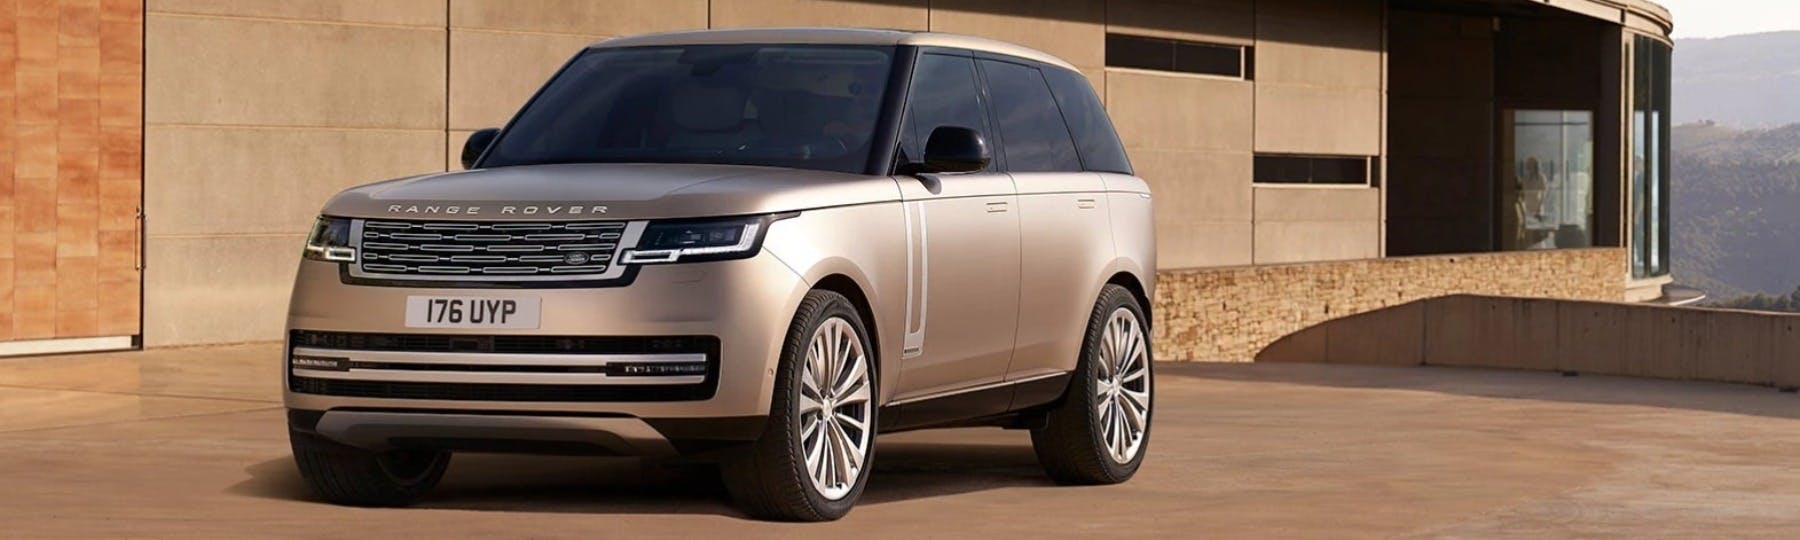 land rover Range Rover New Car Offer